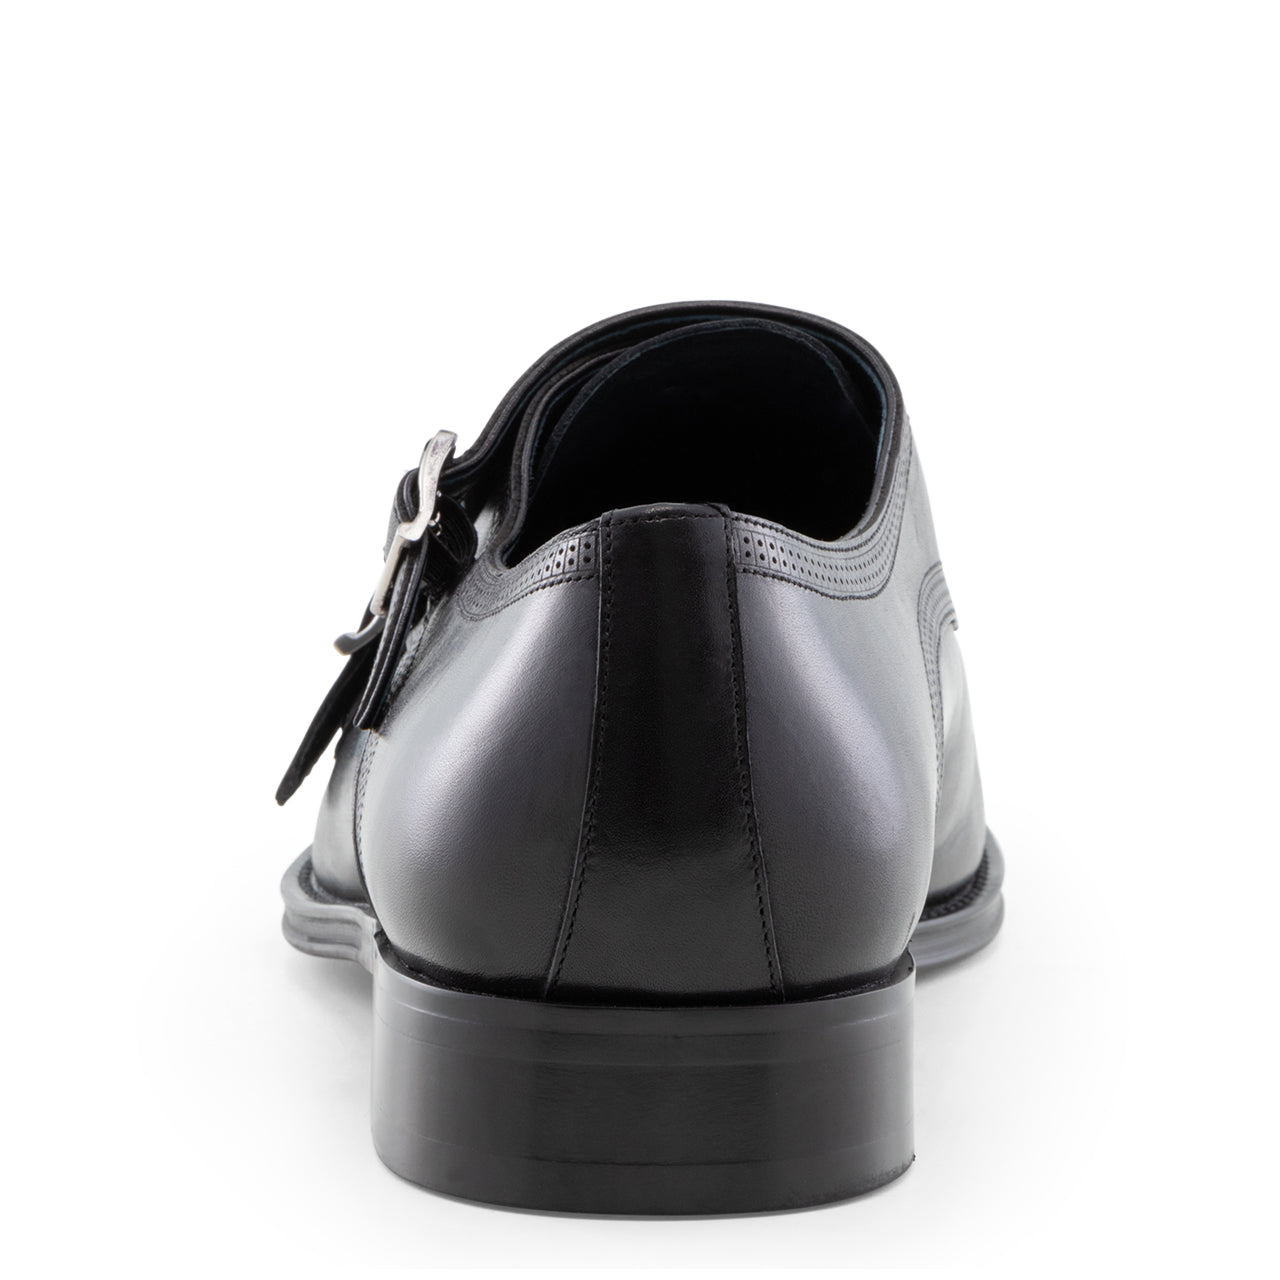 Mccain - Black Double Monk Straps Oxford Dress Shoes for Men by Jump 3